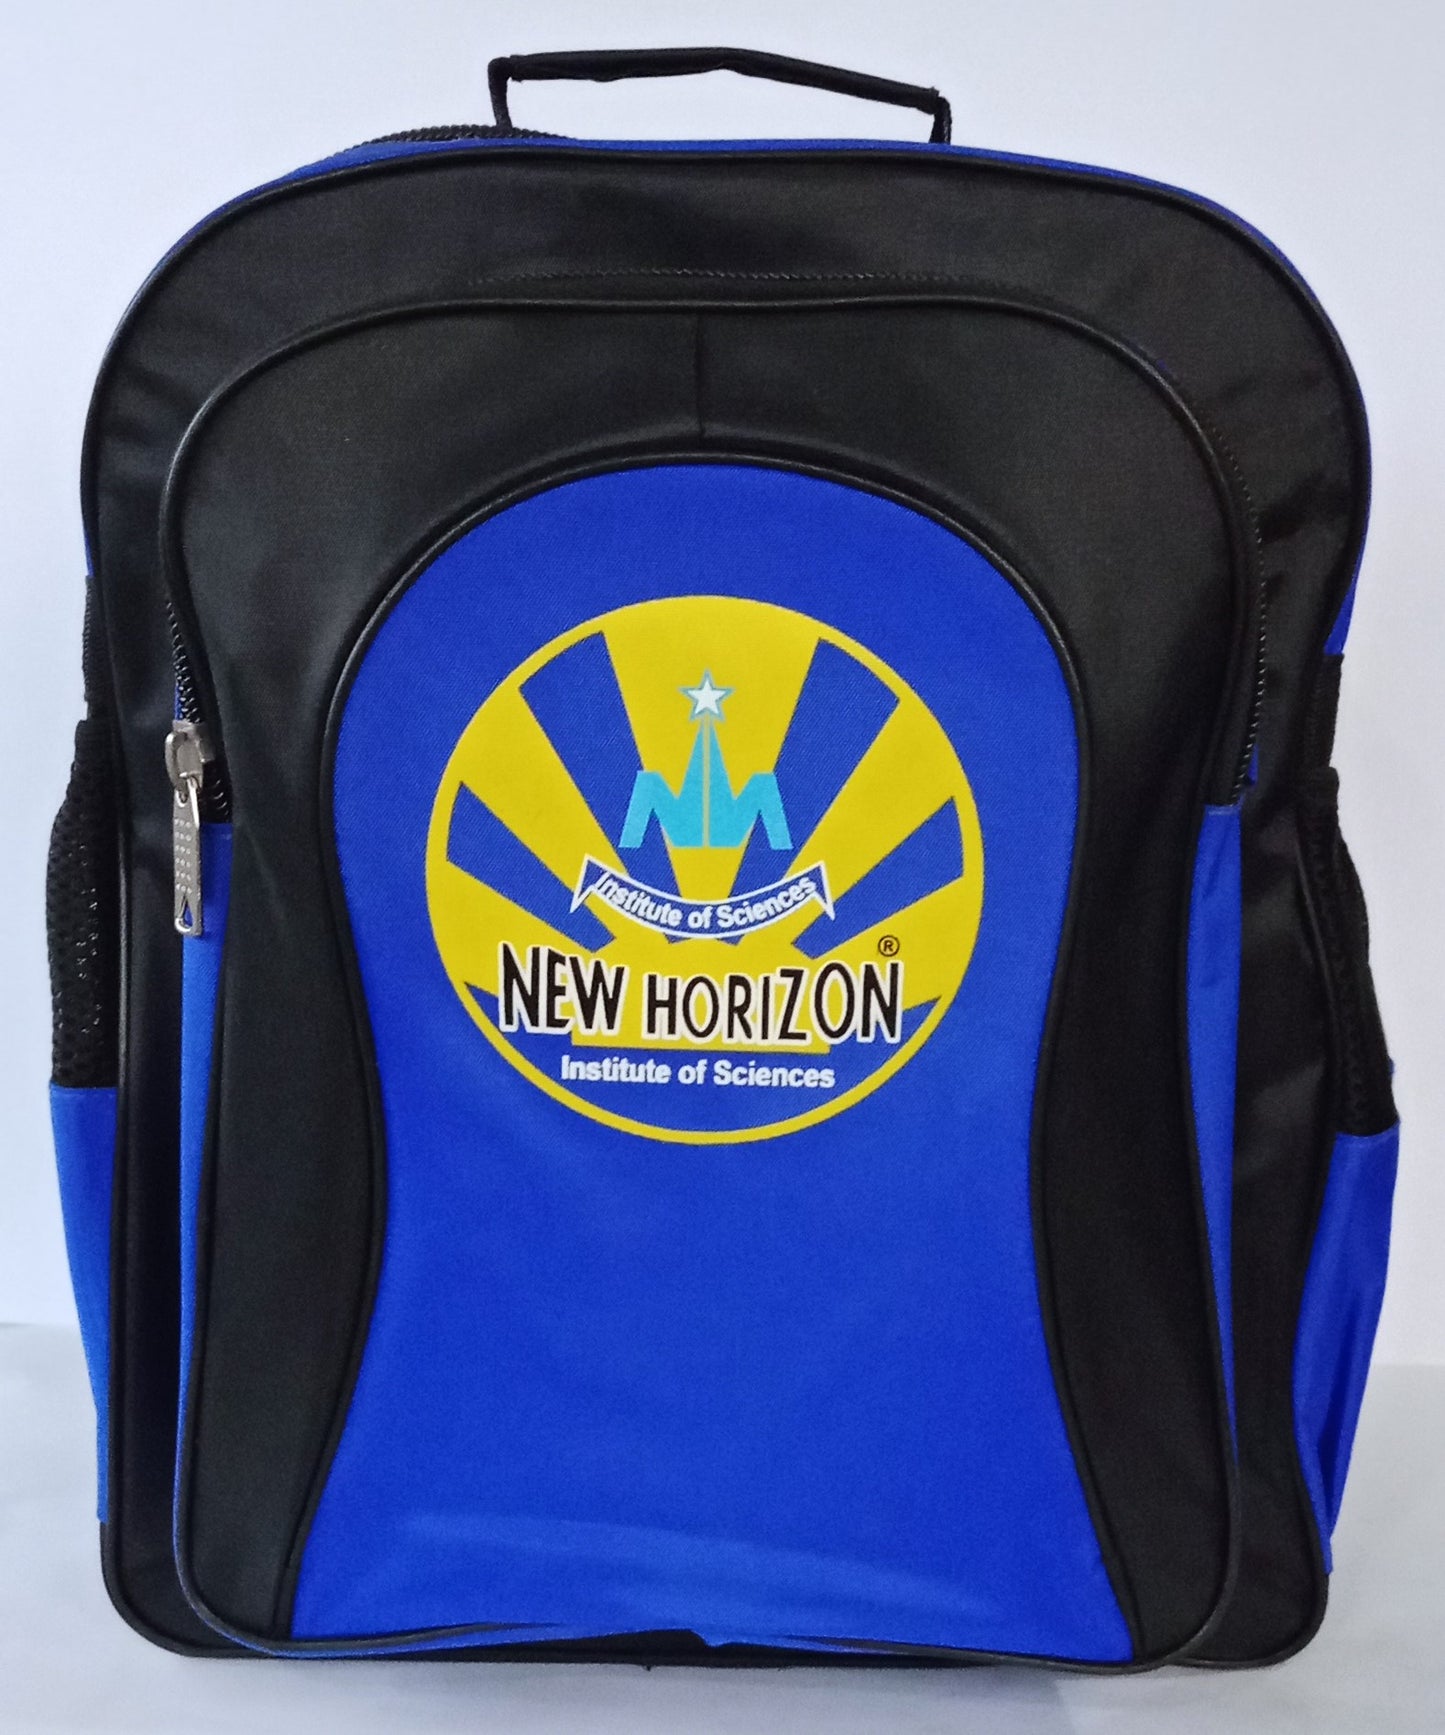 New Horizon School Bag - Backpack